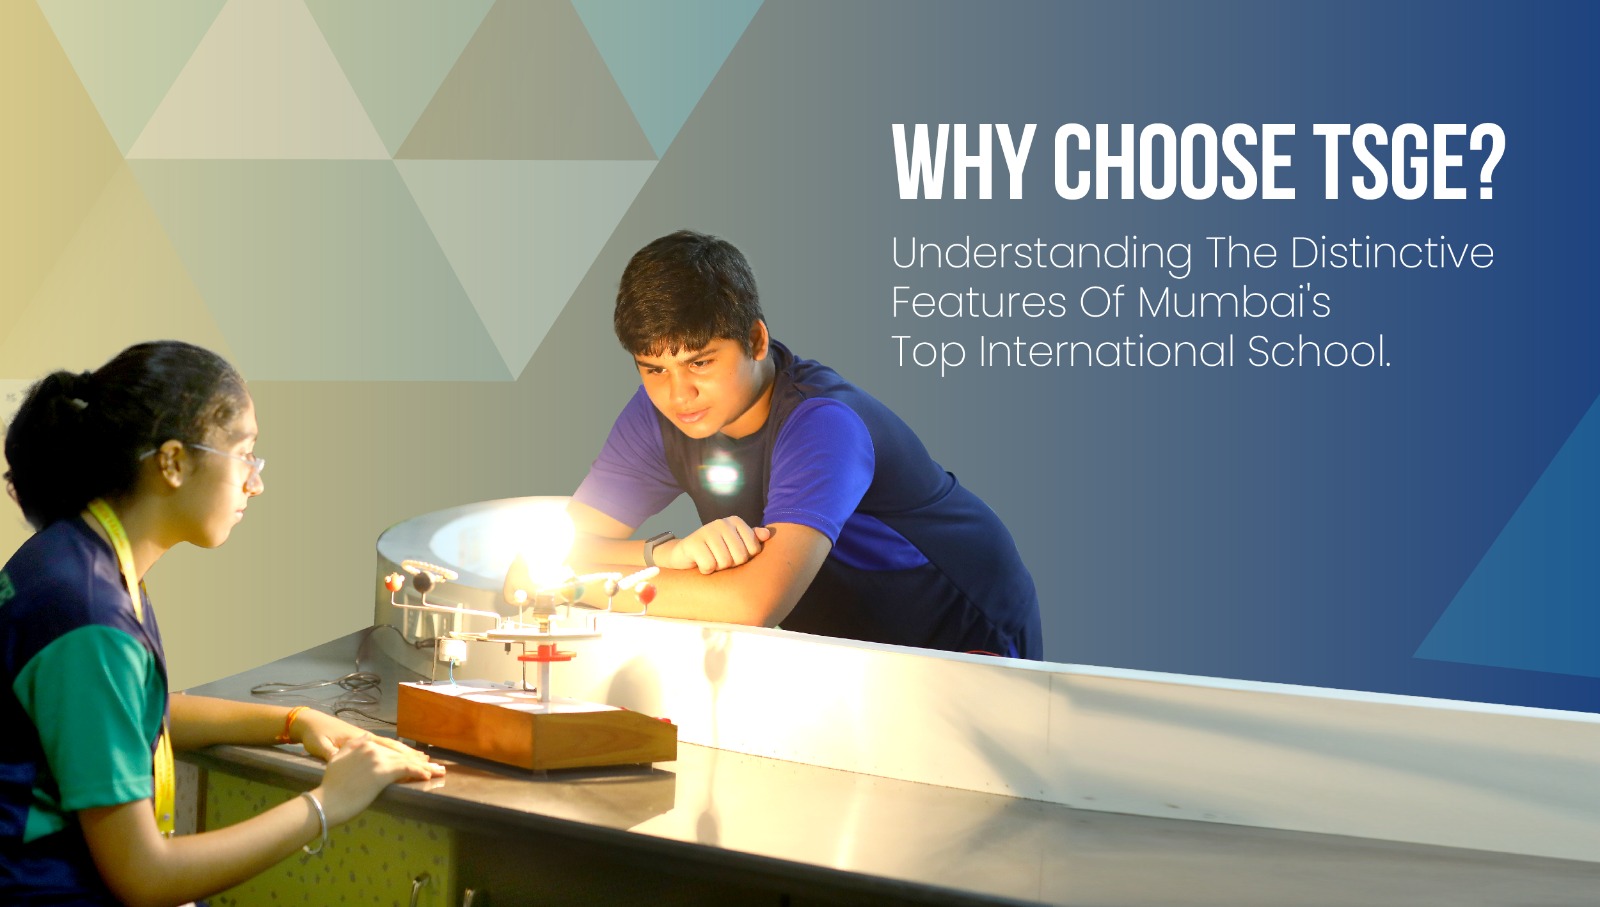 WHY CHOOSE TSGE? UNDERSTANDING THE DISTINCTIVE FEATURES OF MUMBAI’S TOP INTERNATIONAL SCHOOL